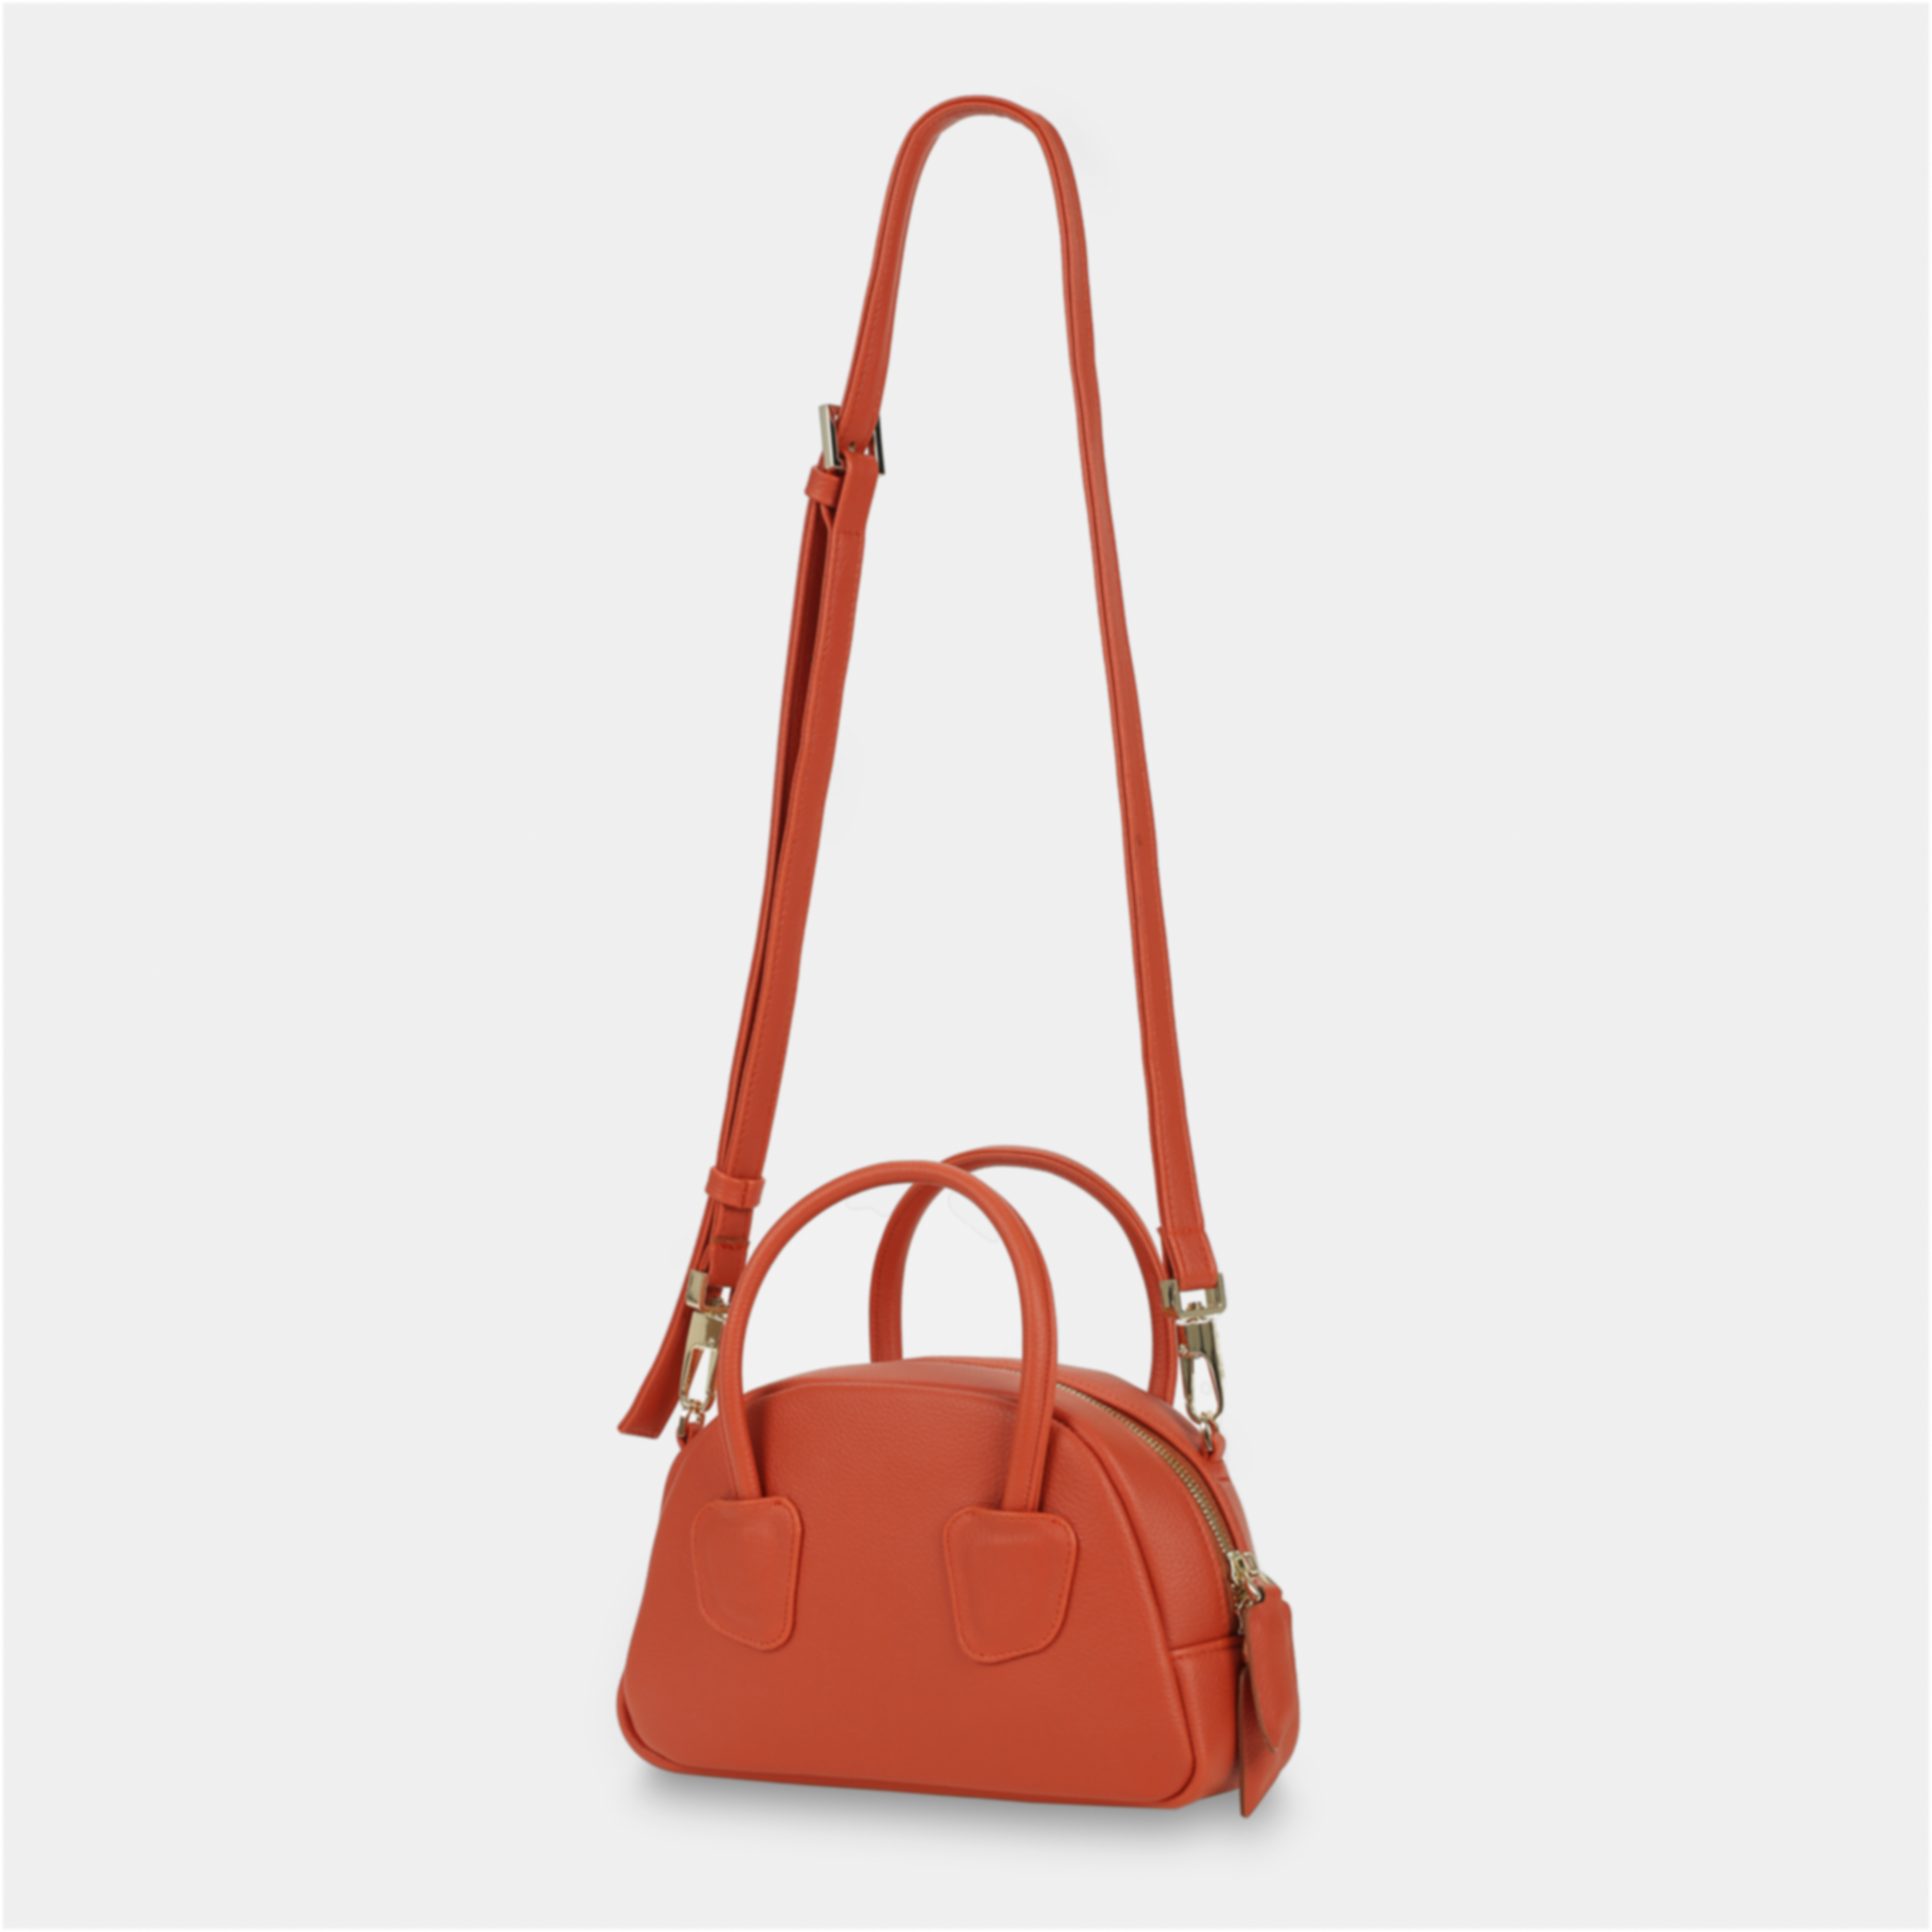 TACOS handbag red orange big size (M)